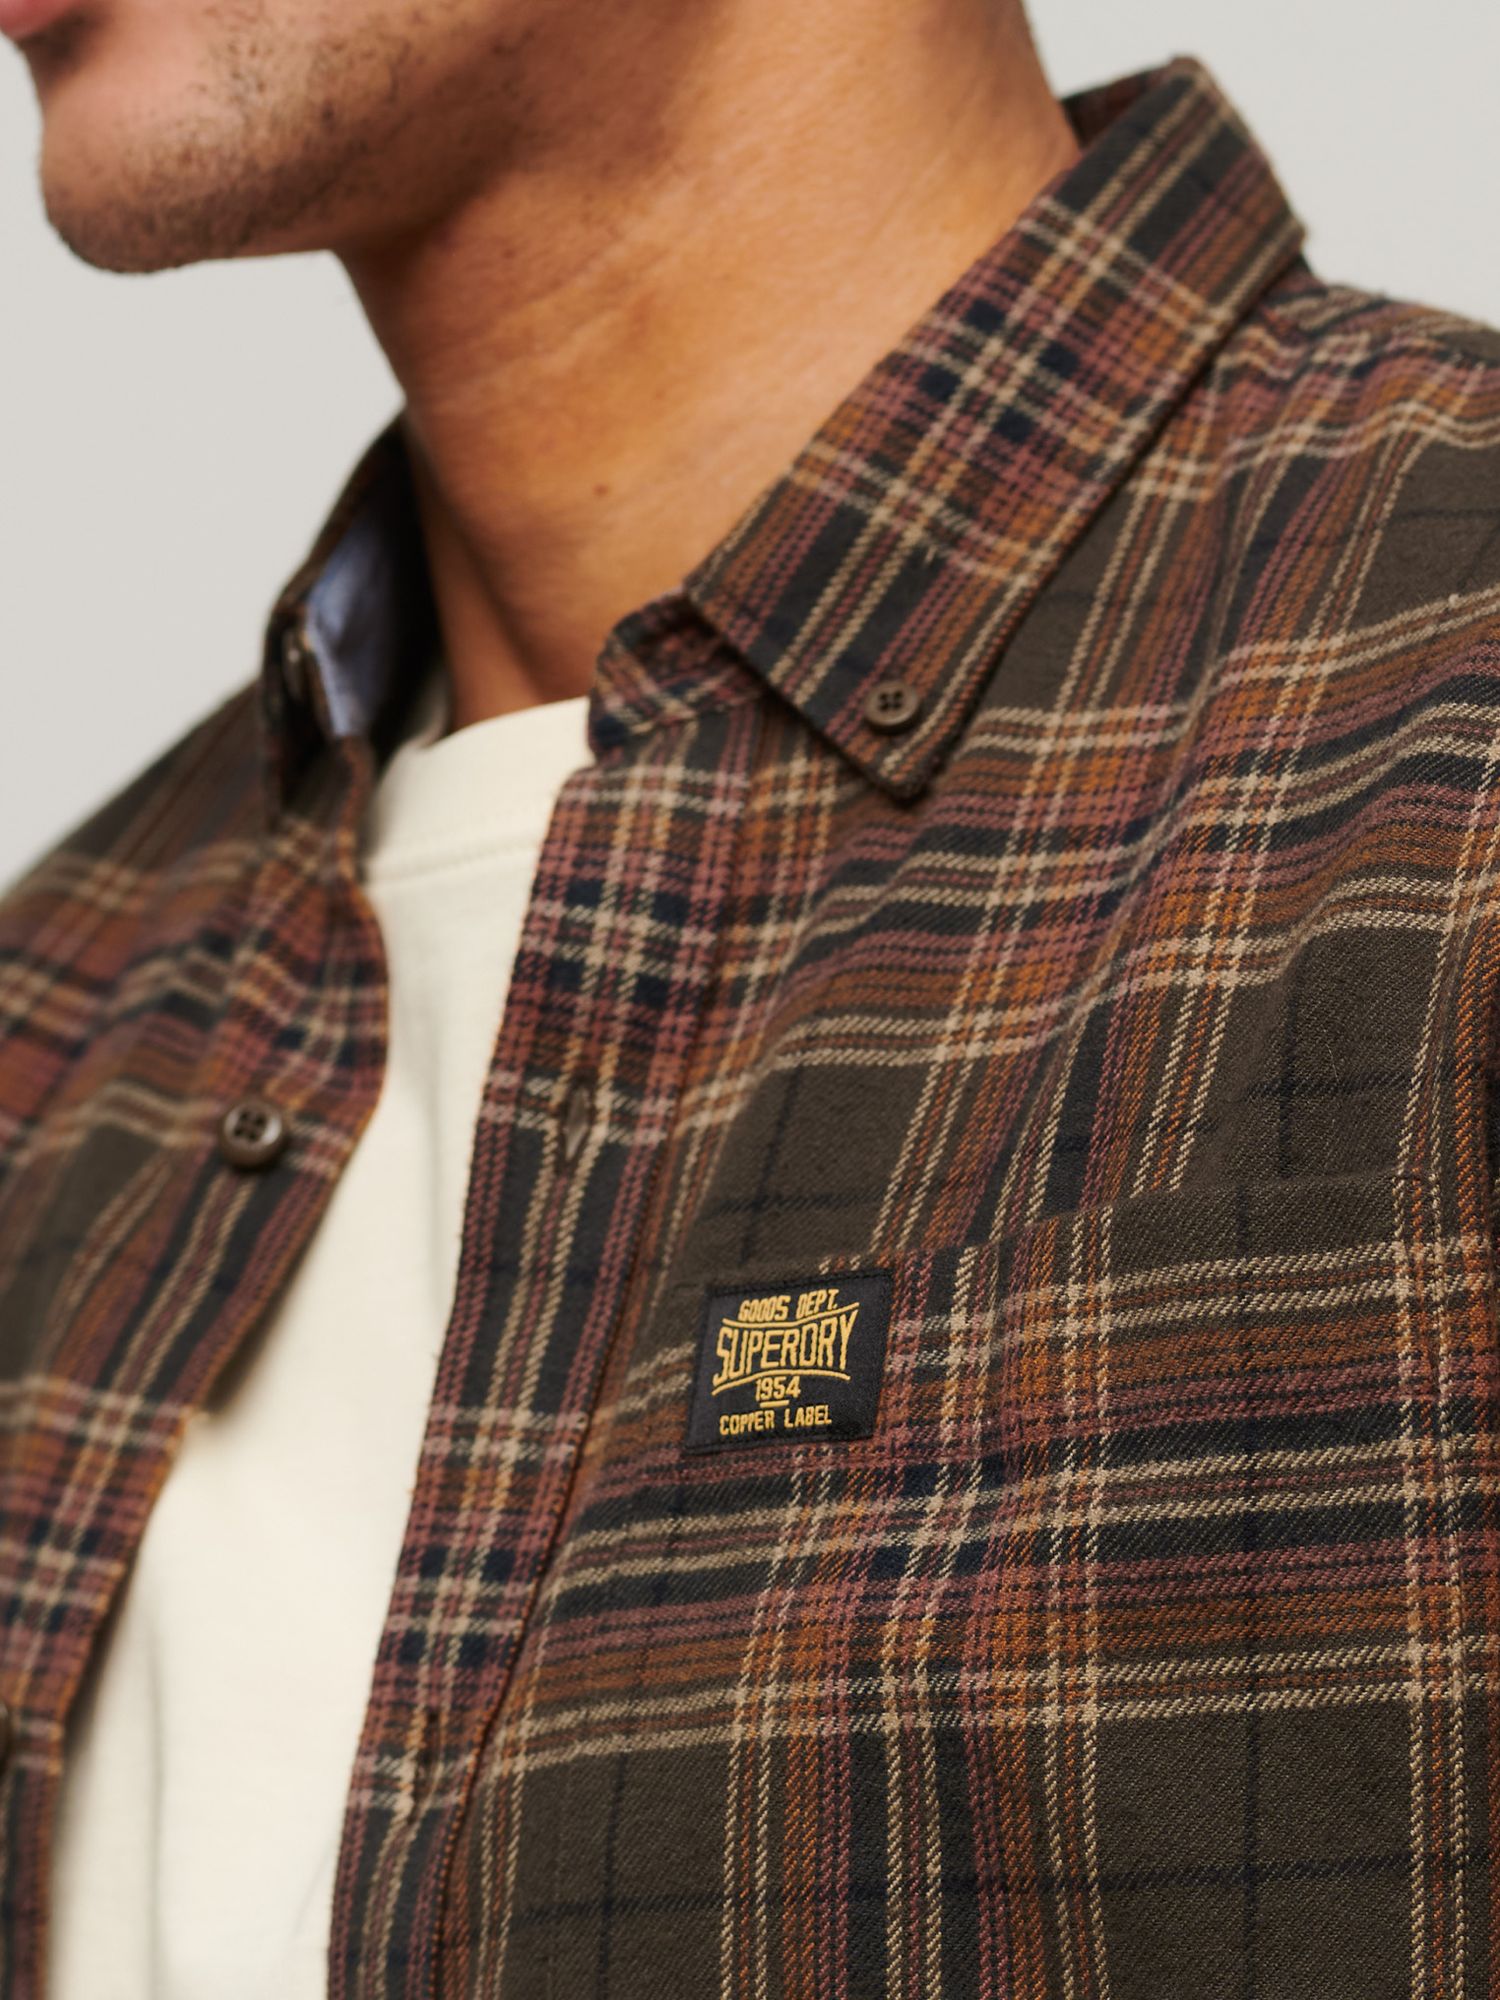 Superdry Organic Cotton Long Sleeve Lumberjack Shirt, Drayton Check Olive, L